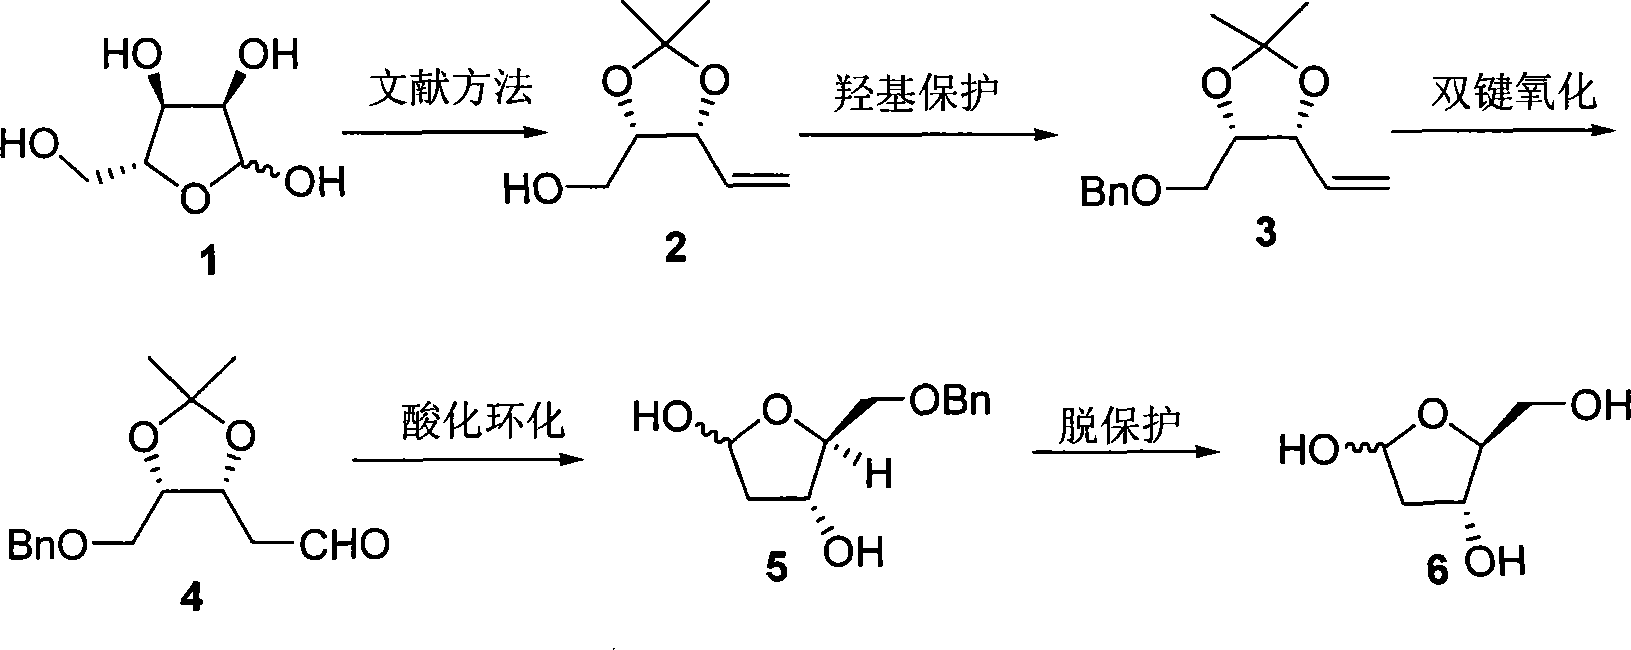 Method of preparing 2-deoxy-L-ribose